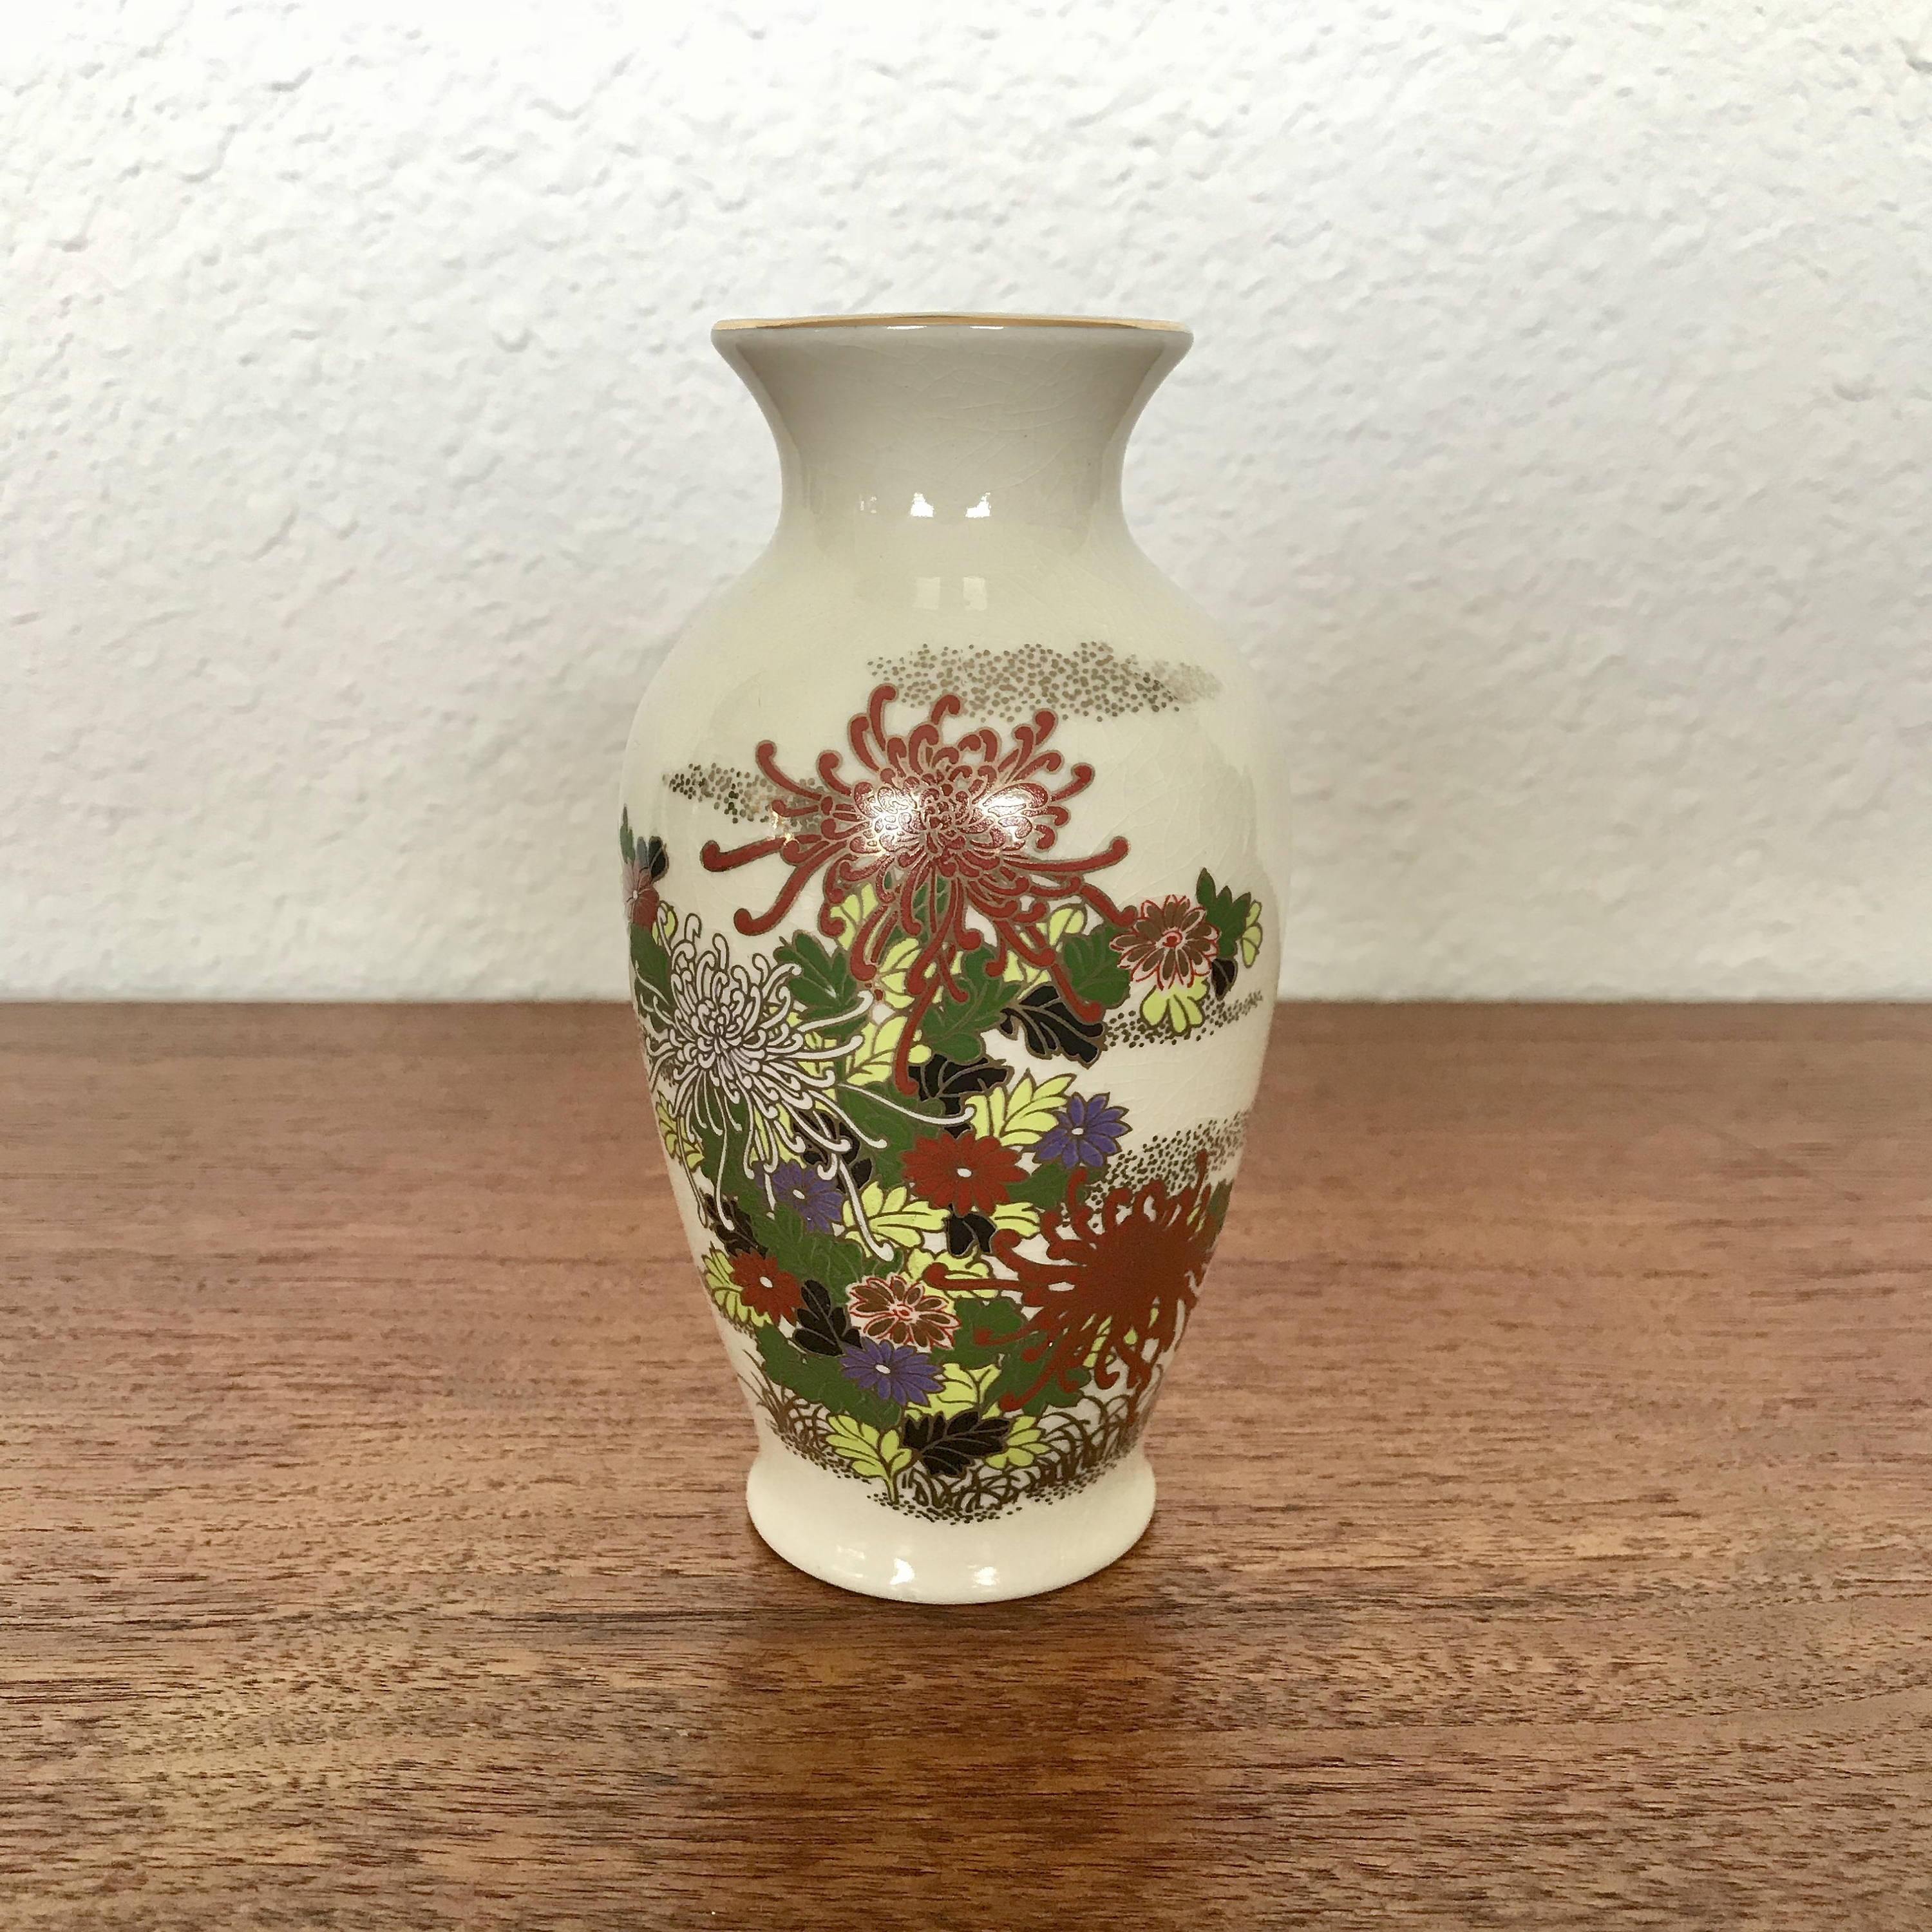 fukagawa porcelain vase of asahi japan sato gordon collection floral vase etsy regarding dzoom